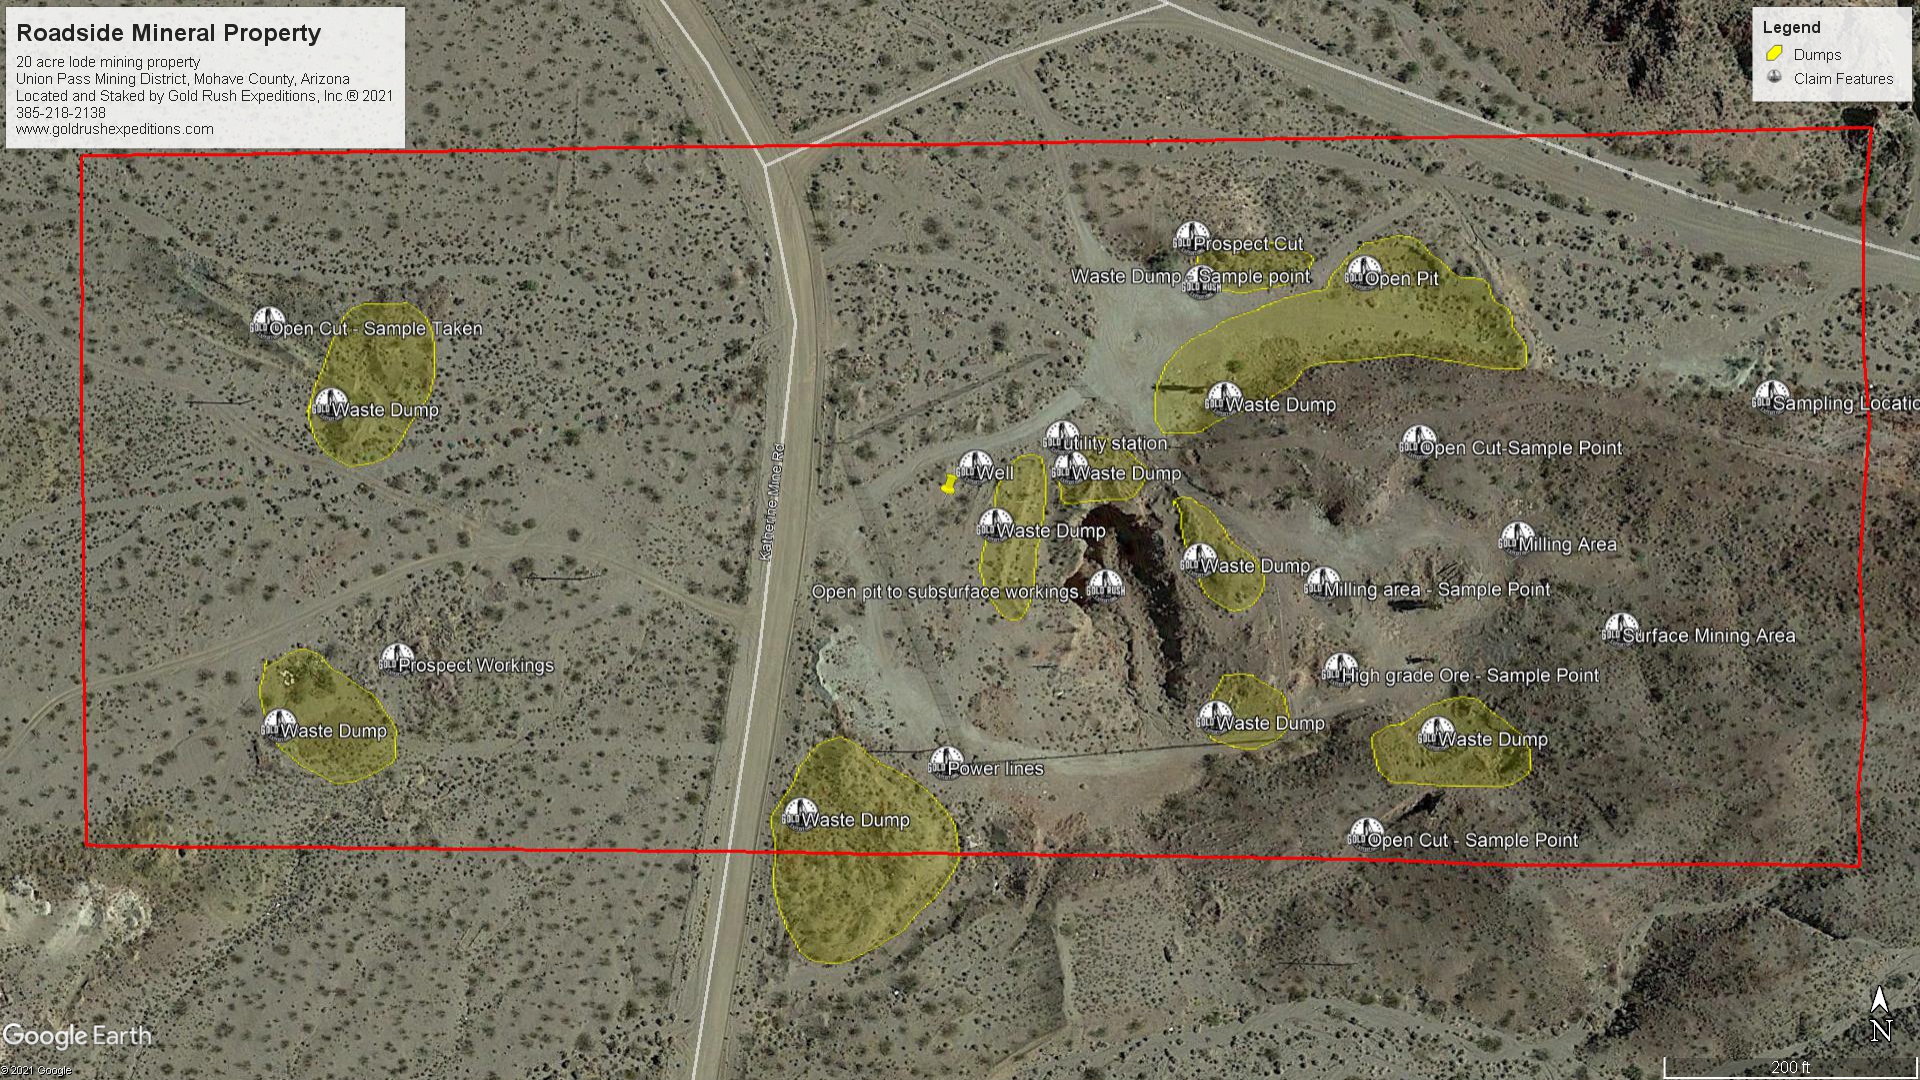 Gold Rush Expeditions, Inc Roadside (Arizona Rand) Mineral Property Map